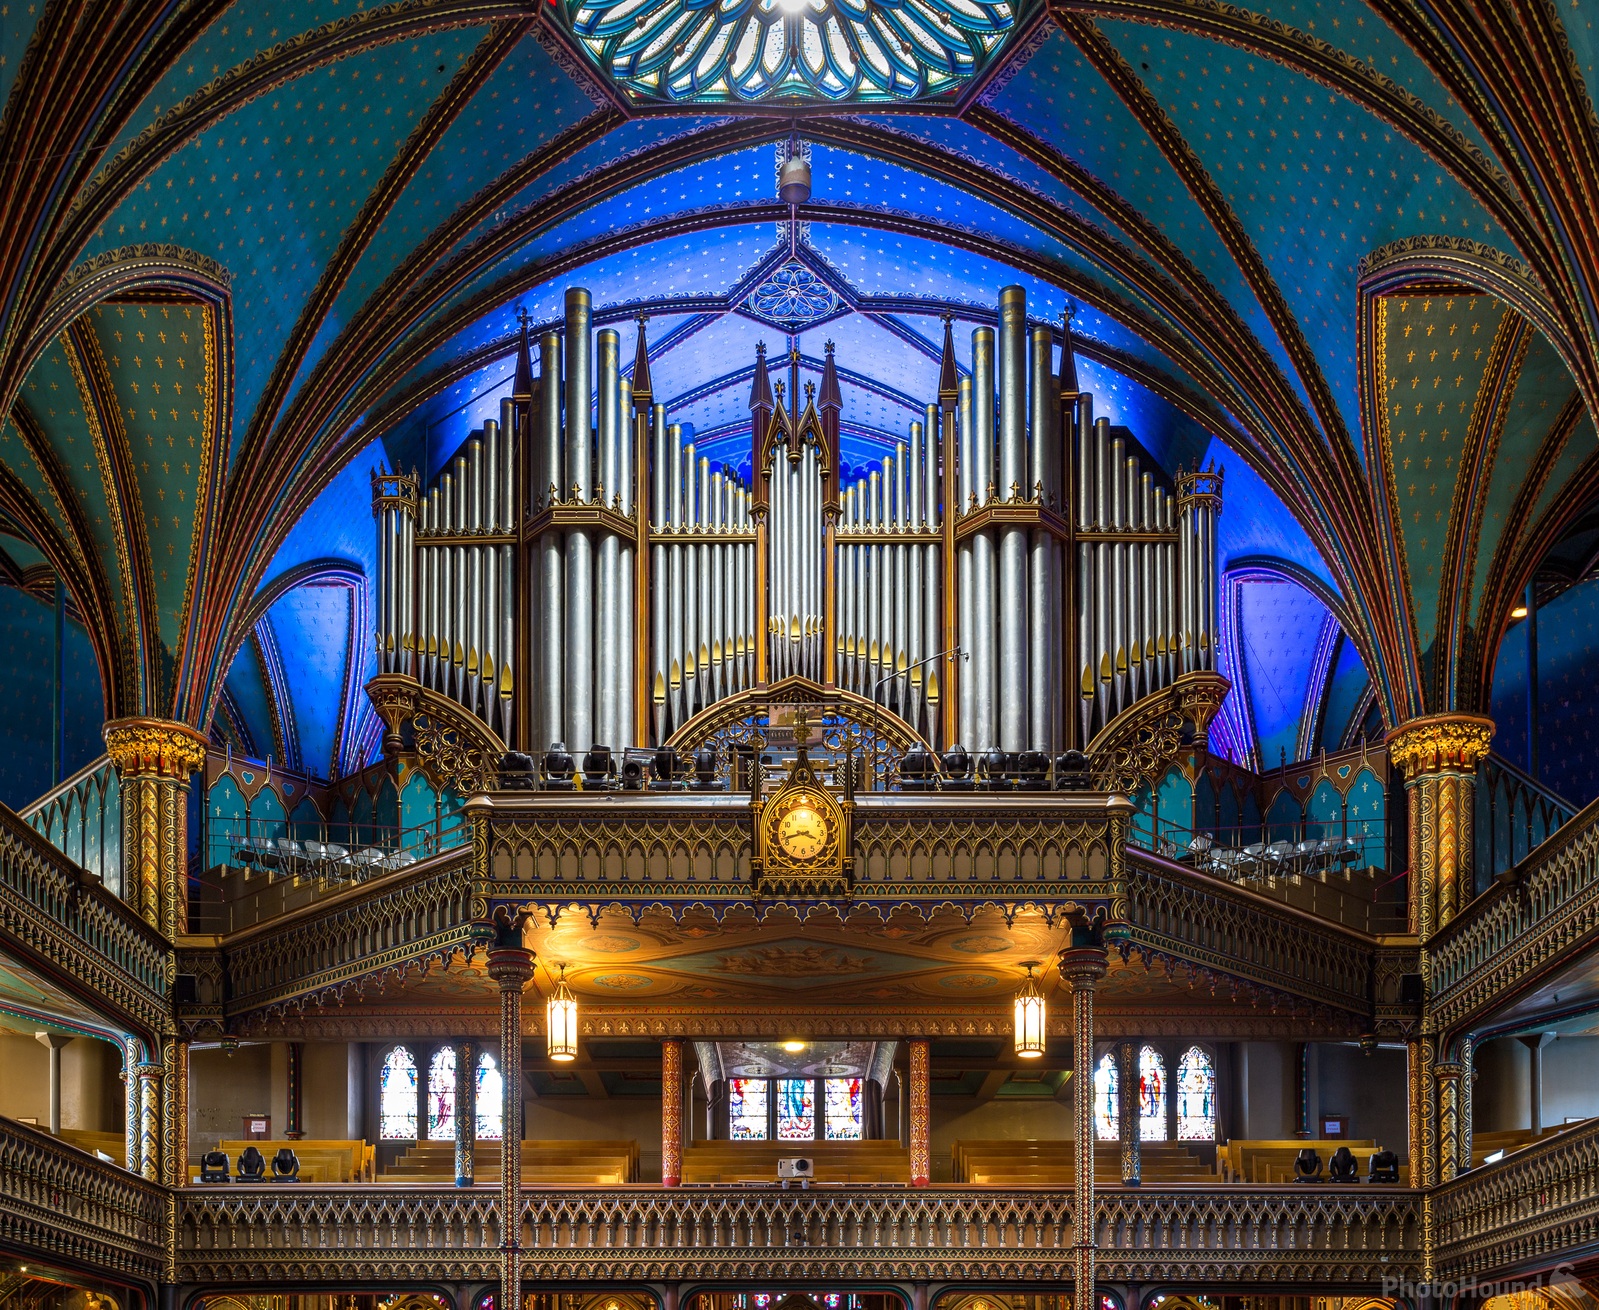 Image of Notre Dame Basilica by Joe Becker